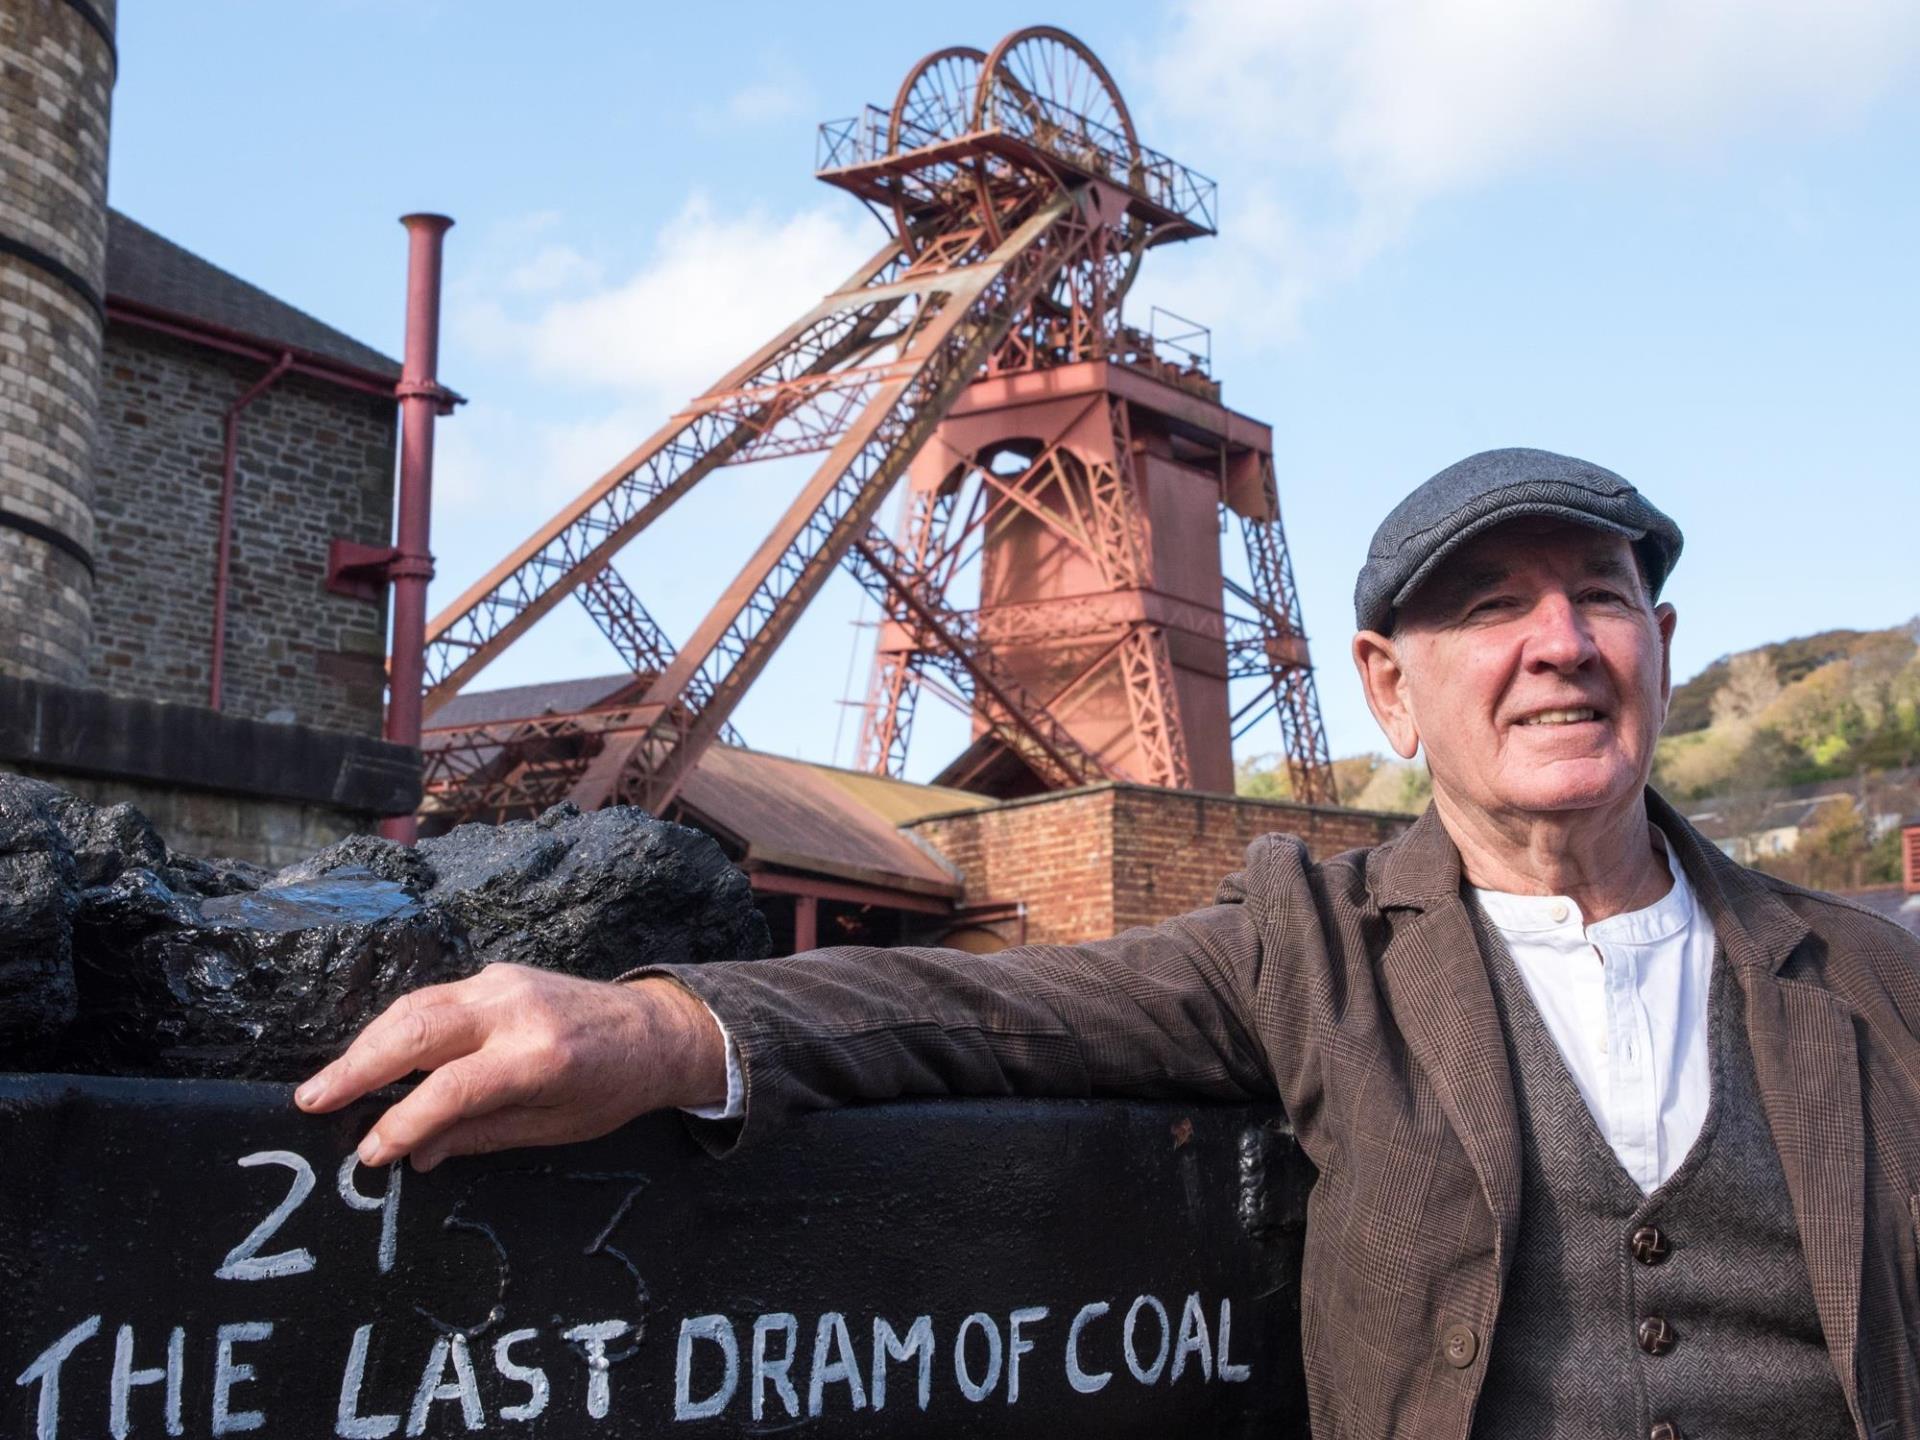 The Last Dram on Coal